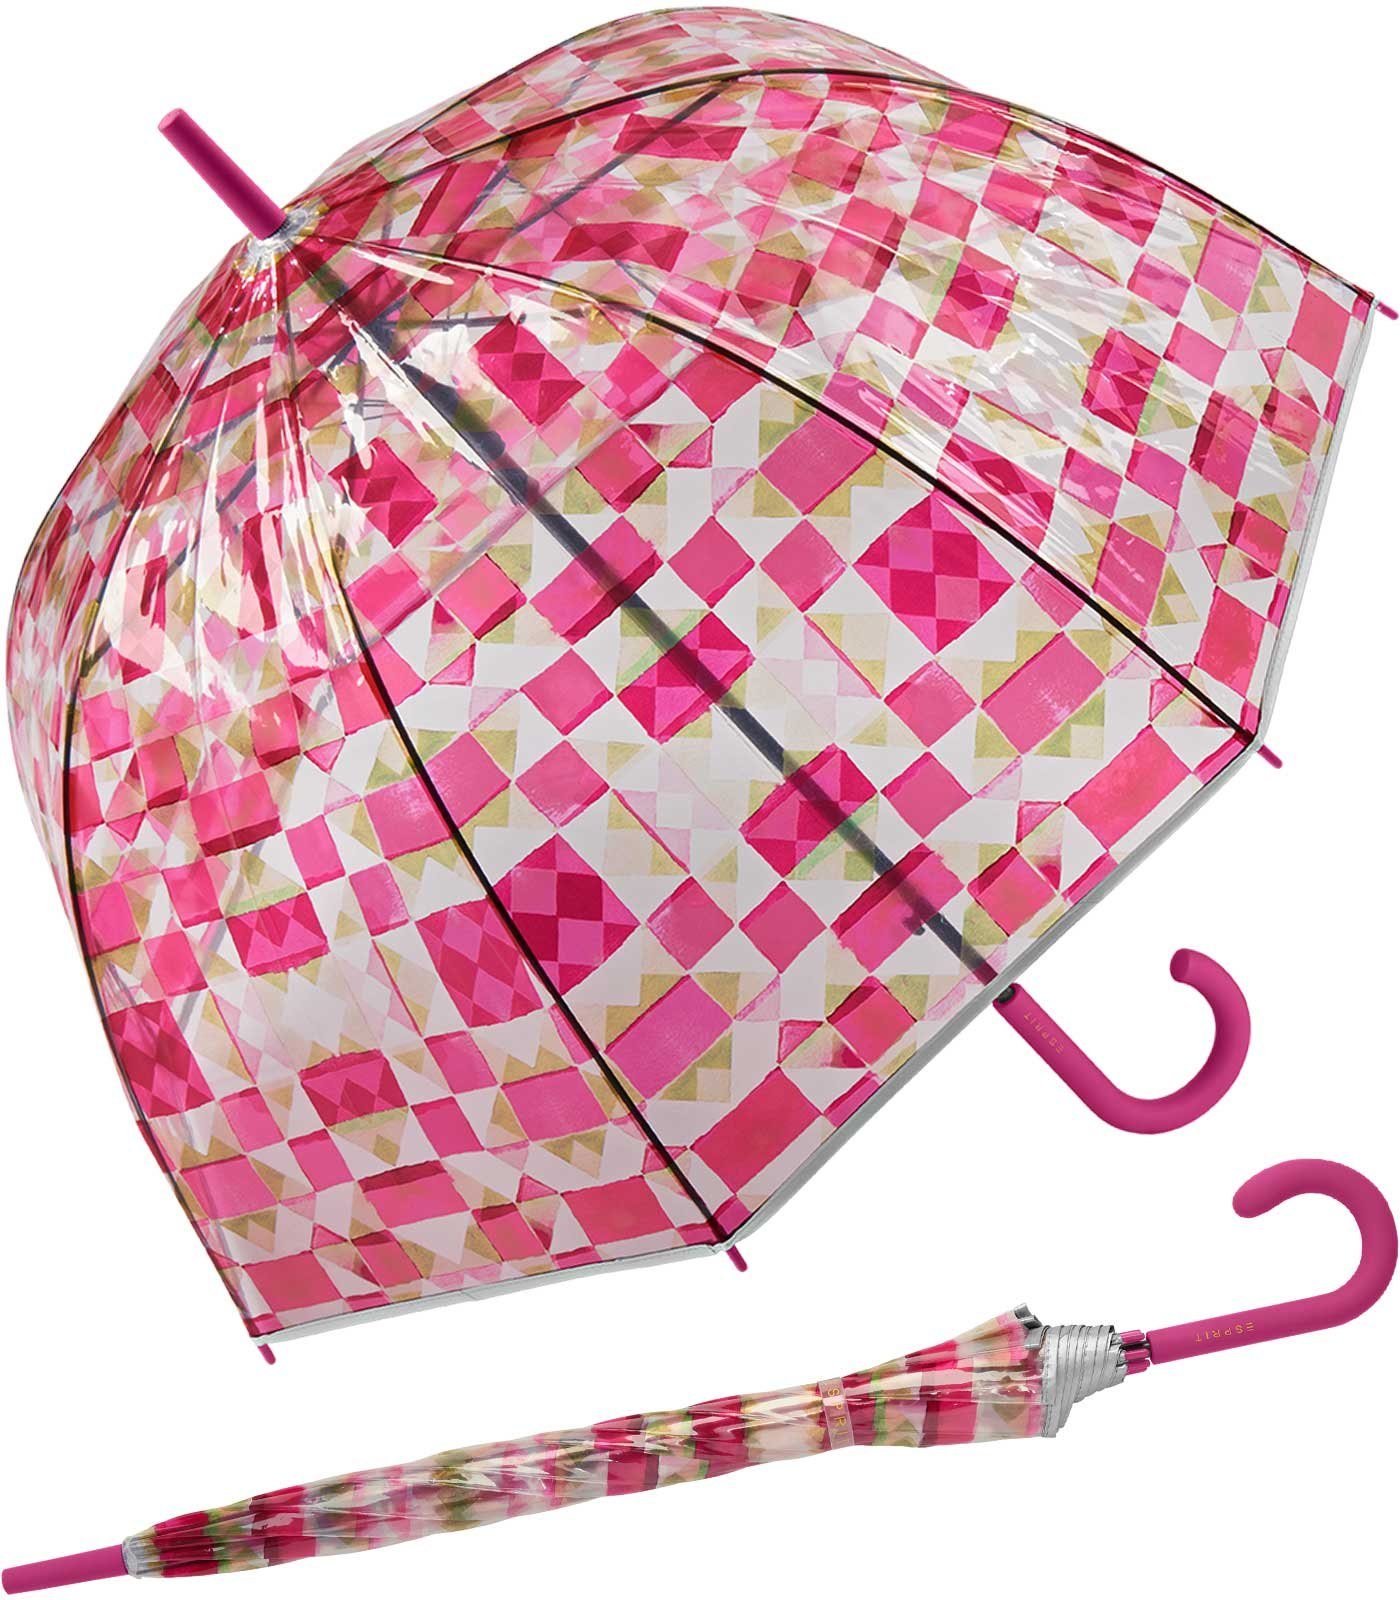 Esprit Langregenschirm Automatik-Glockenschirm Kaleidoscope transparent, farbenfroh bedruckt mit pinkfarbenen Vierecken